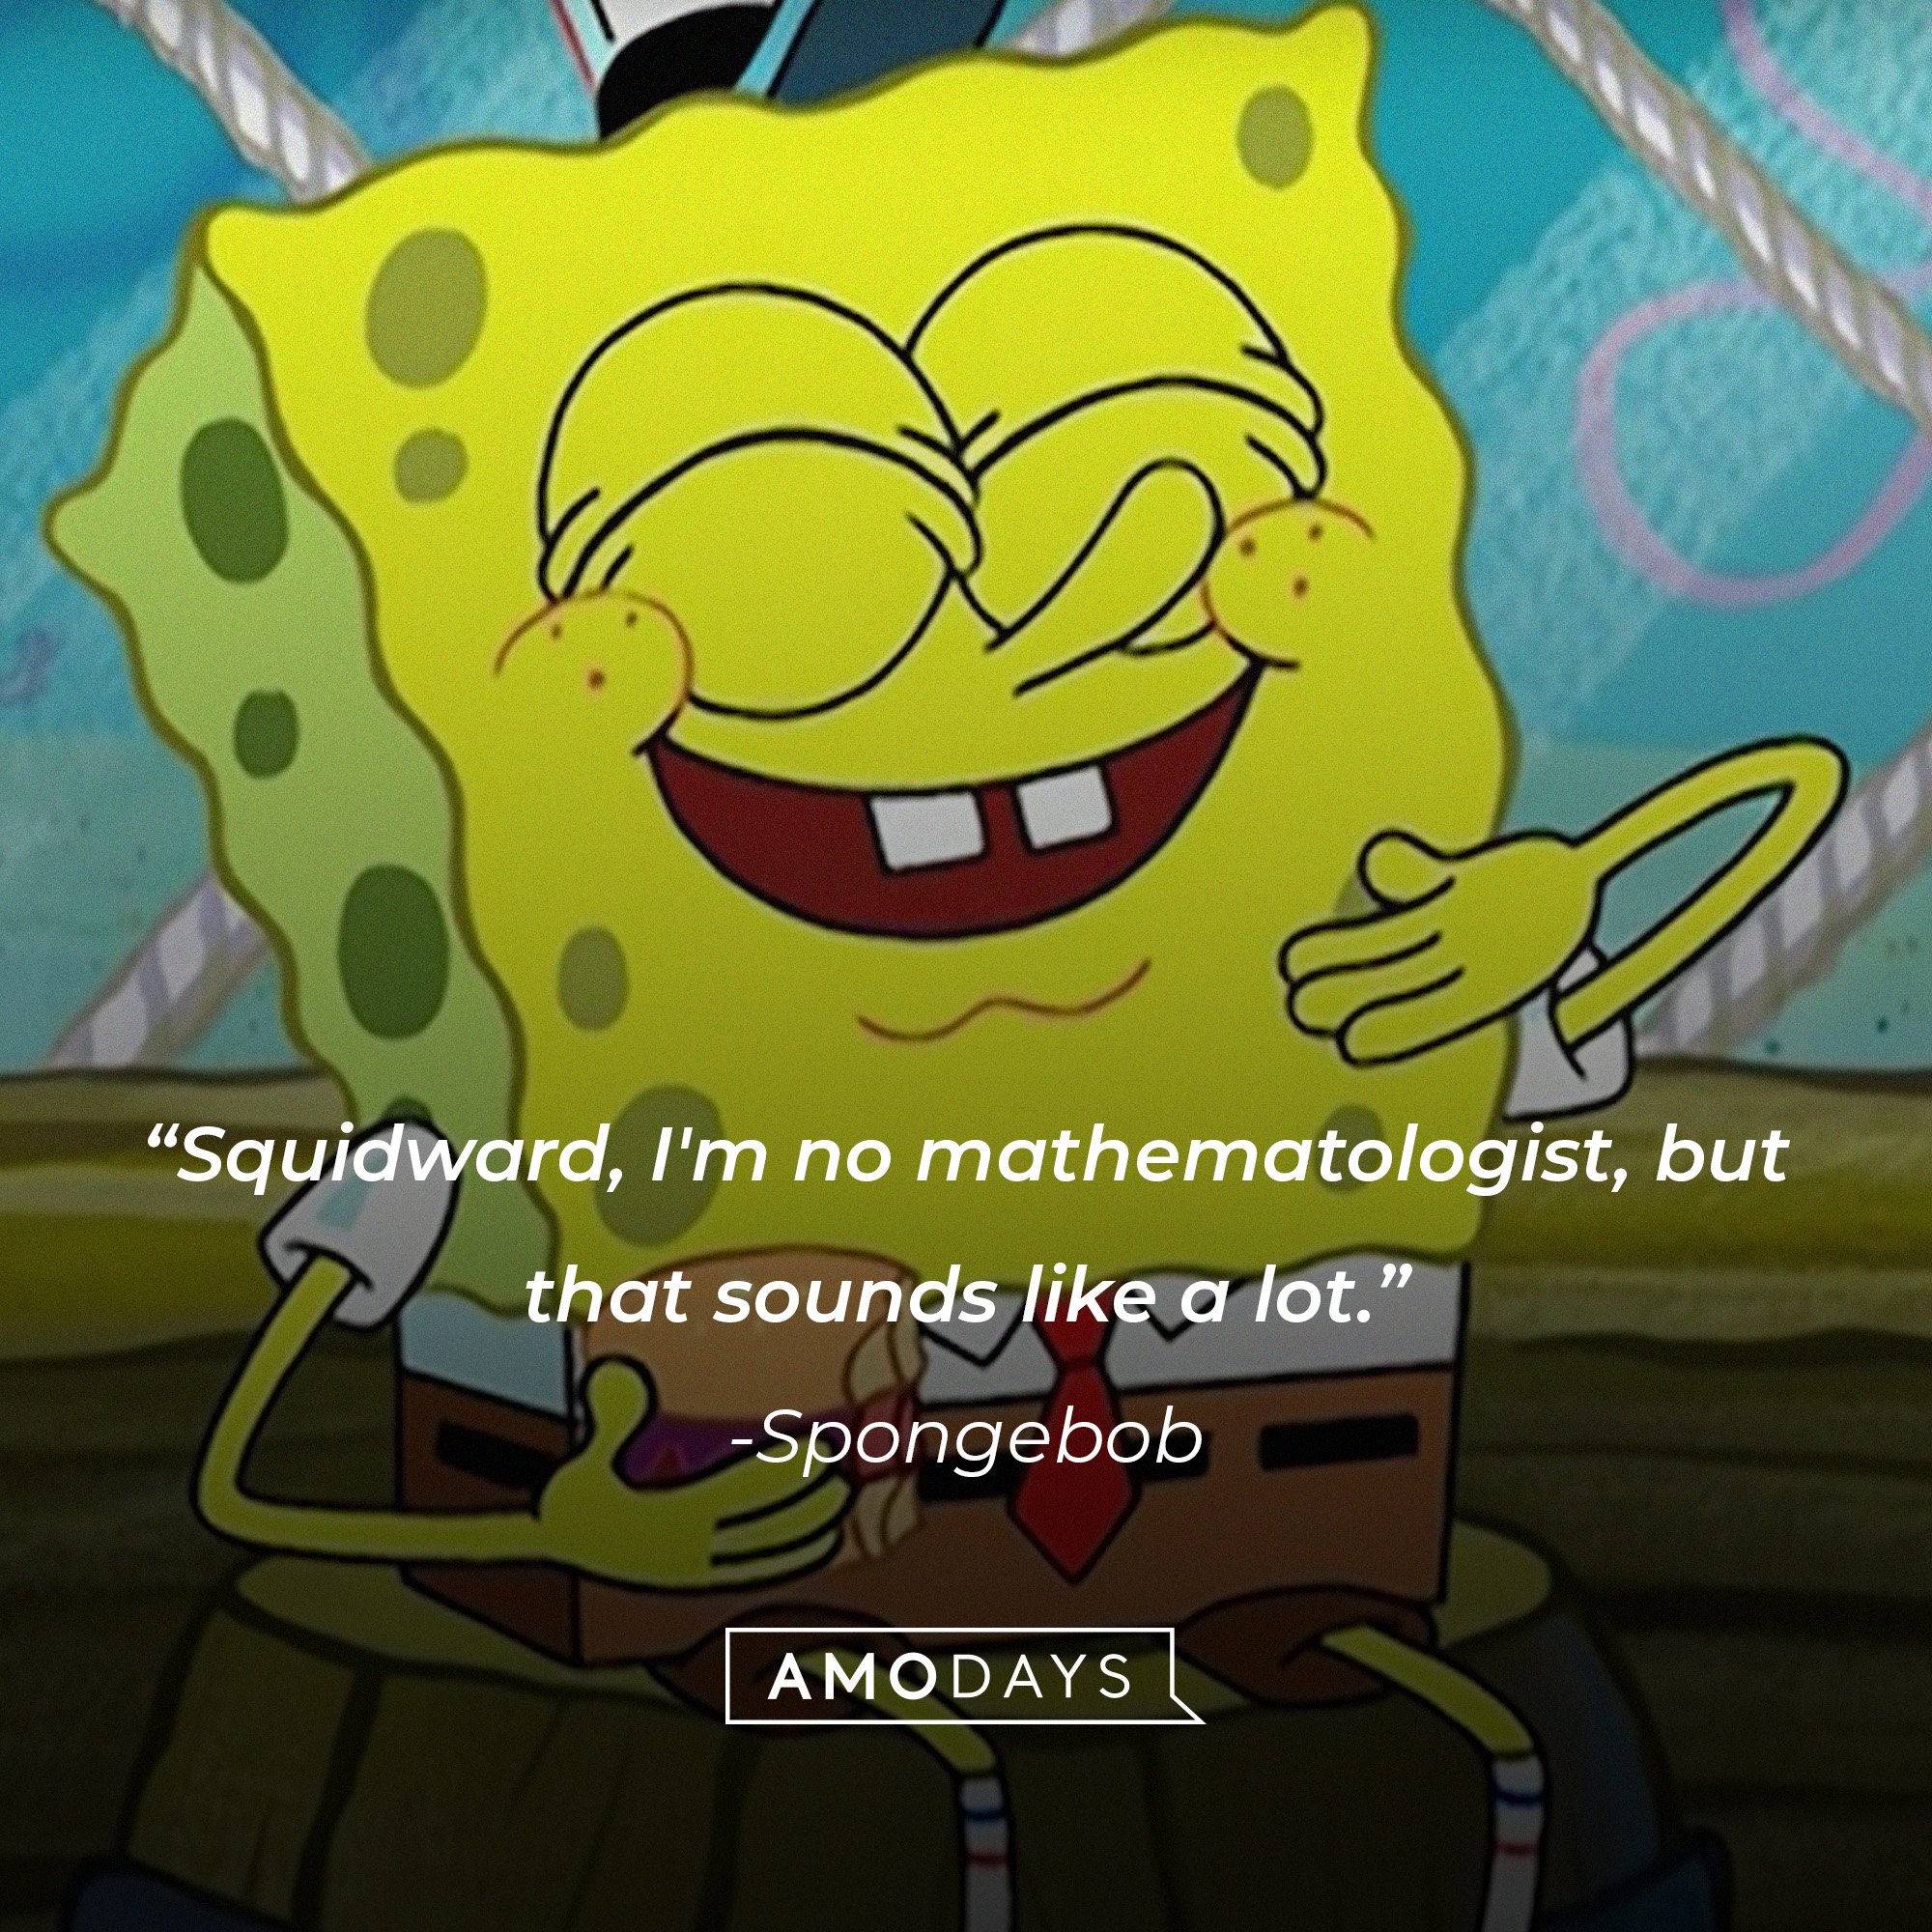 Spongebob Squarepants’ quote: “Squidward, I'm no mathematologist, but that sounds like a lot.” | Source: AmoDays